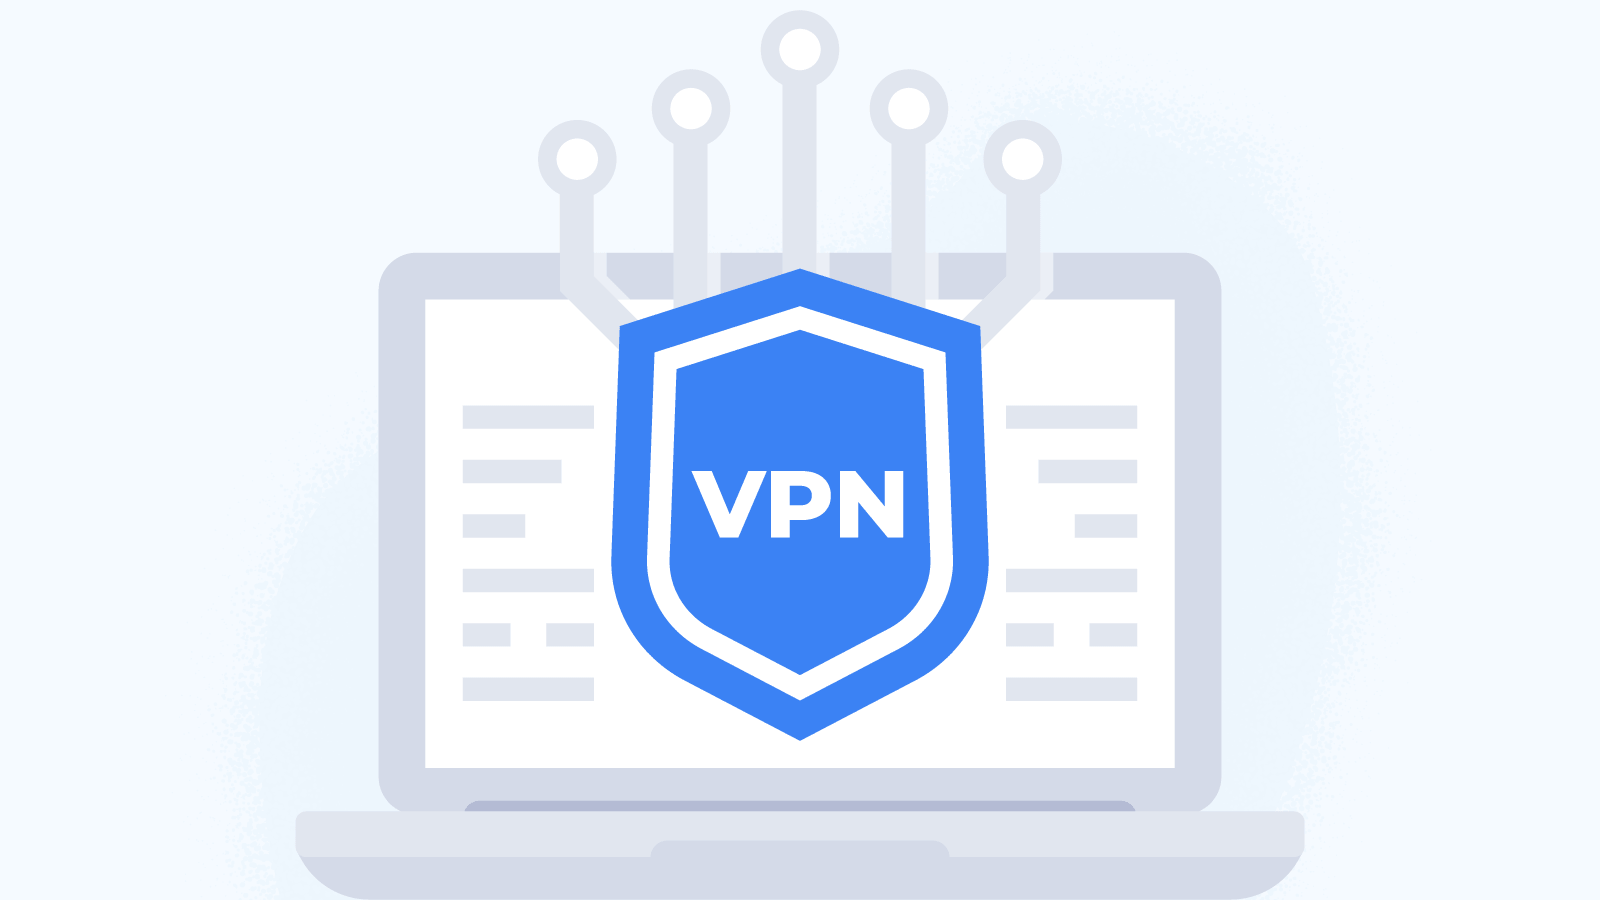 Using VPN software